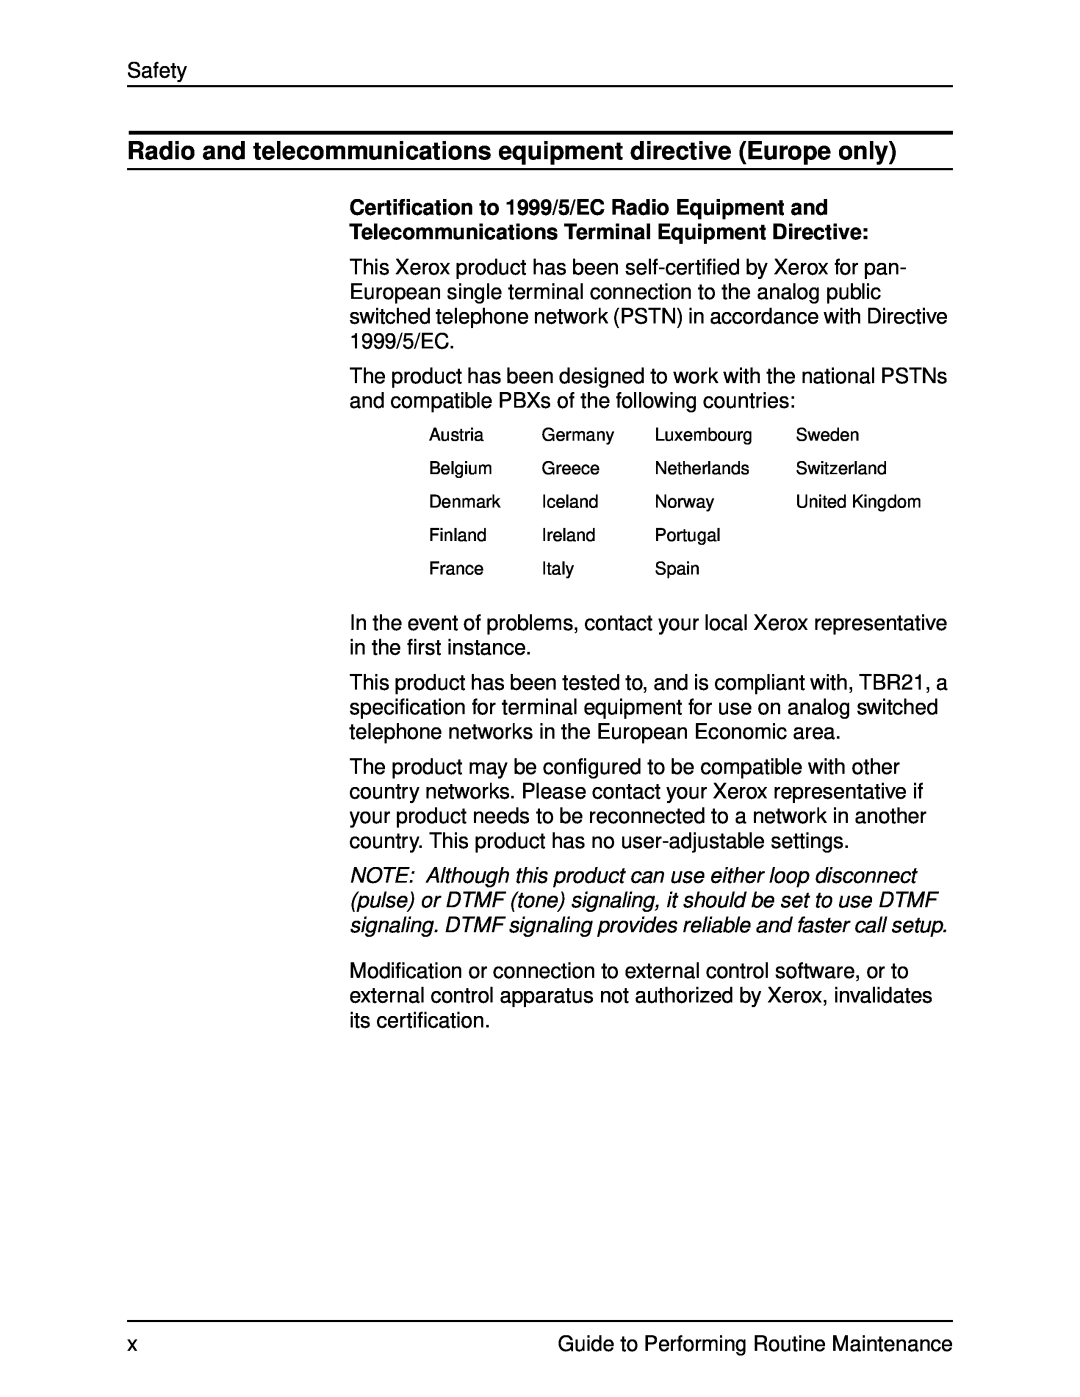 Xerox DocuPrint 96 manual Radio and telecommunications equipment directive Europe only 